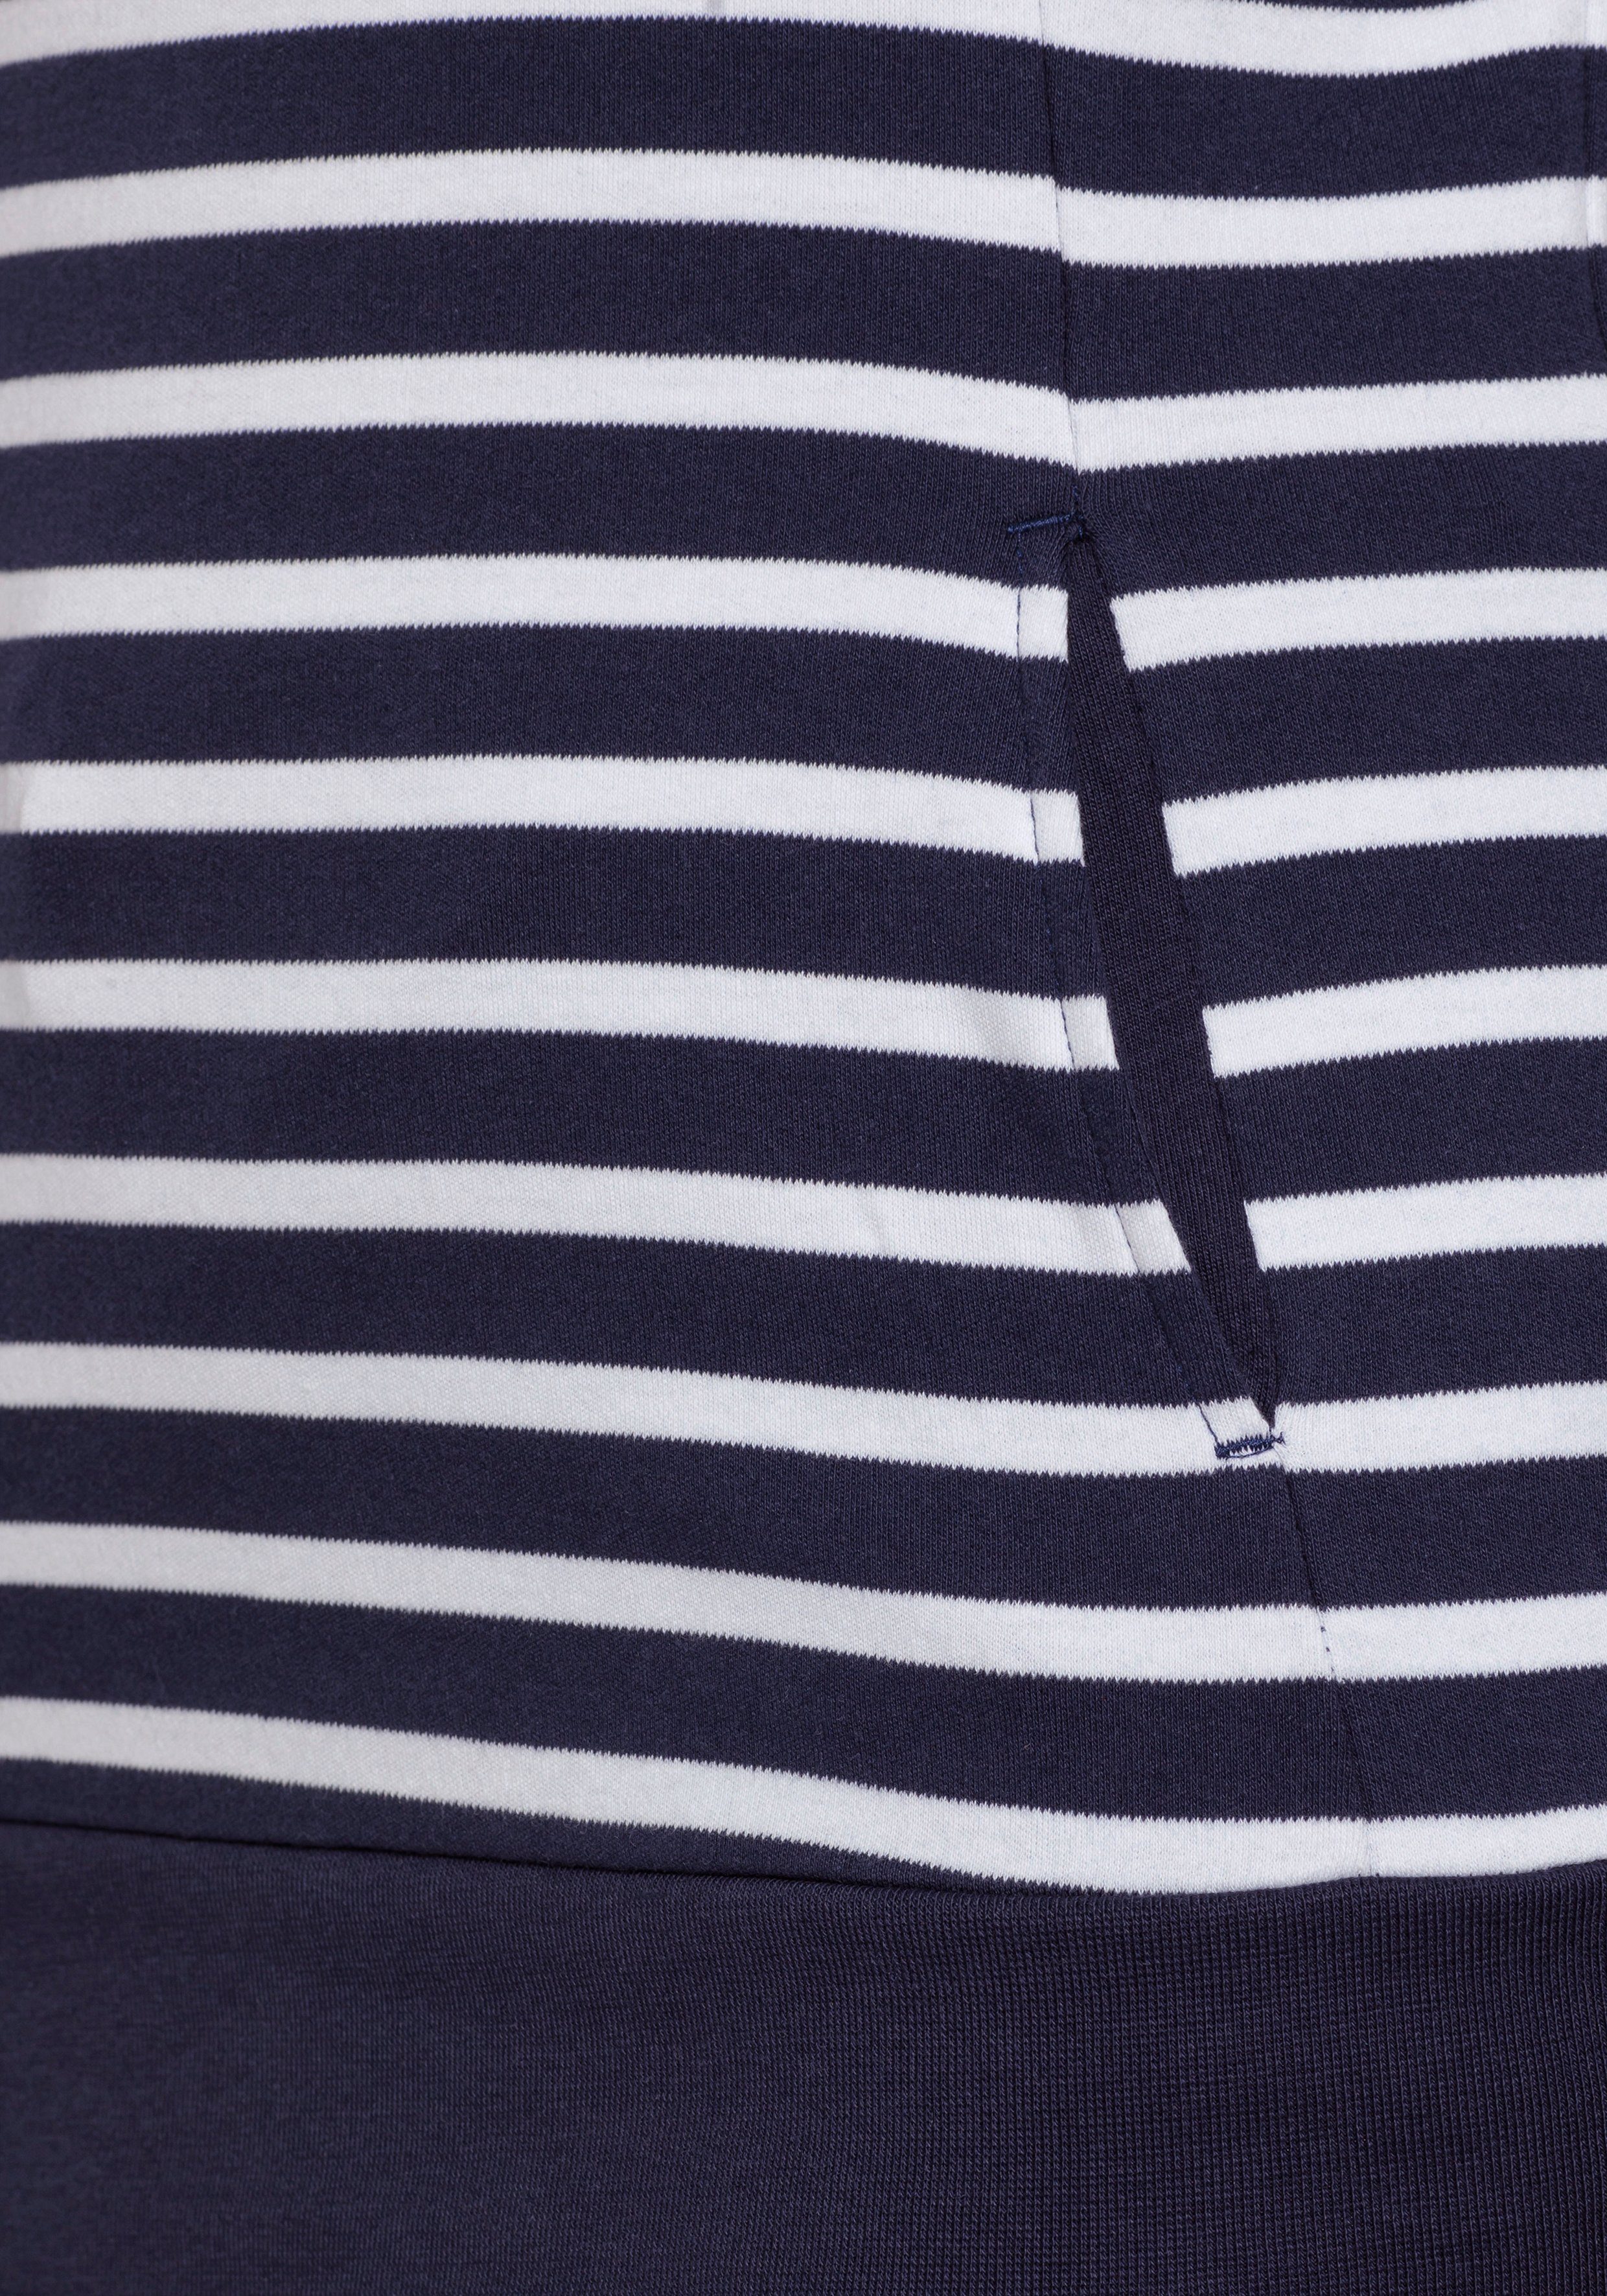 KangaROOS -NEUE-KOLLEKTION mit Sweatshirt Streifen